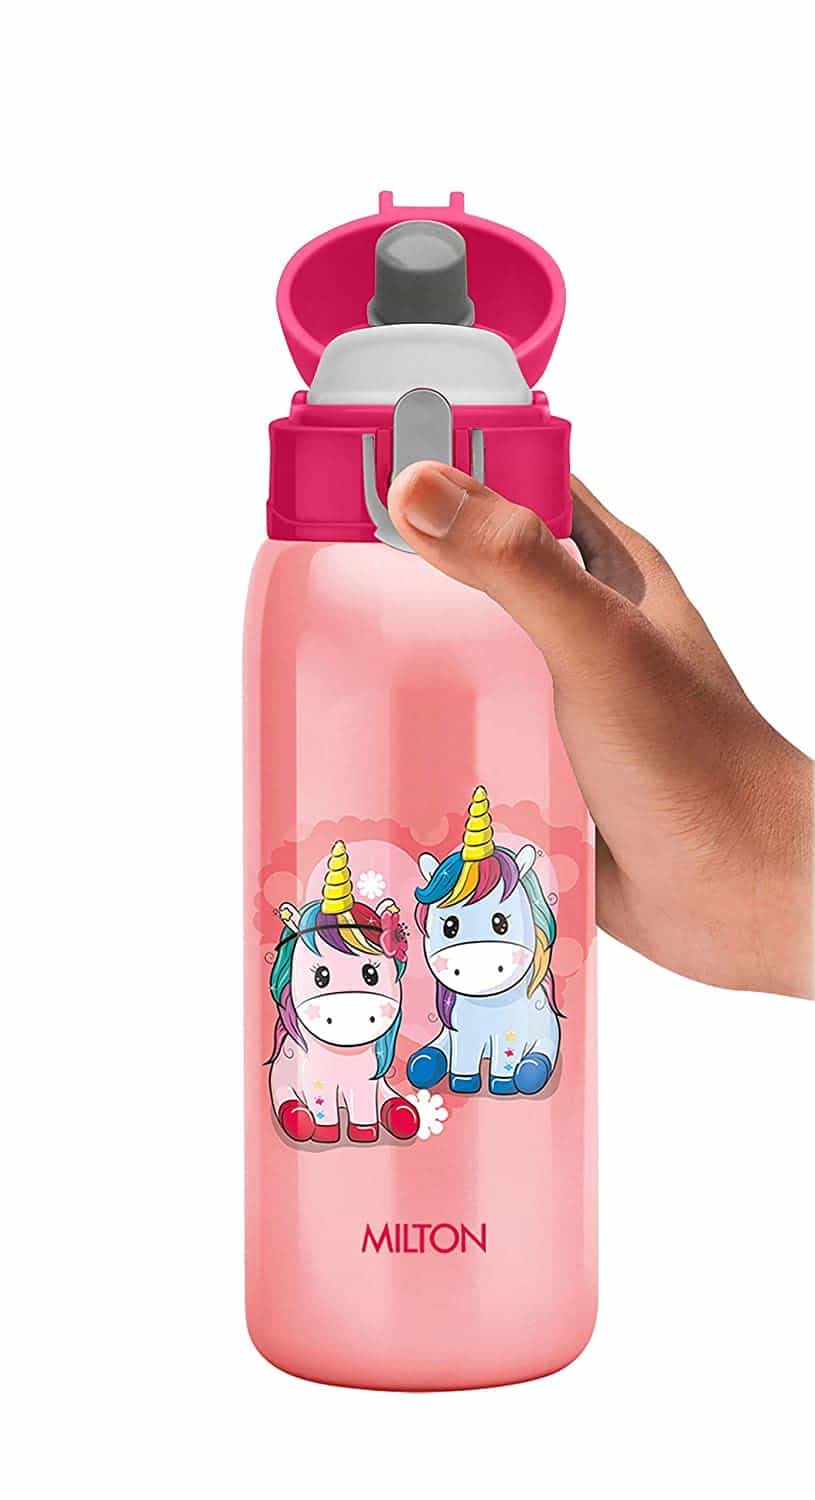 milton thermosteel bottle for kids